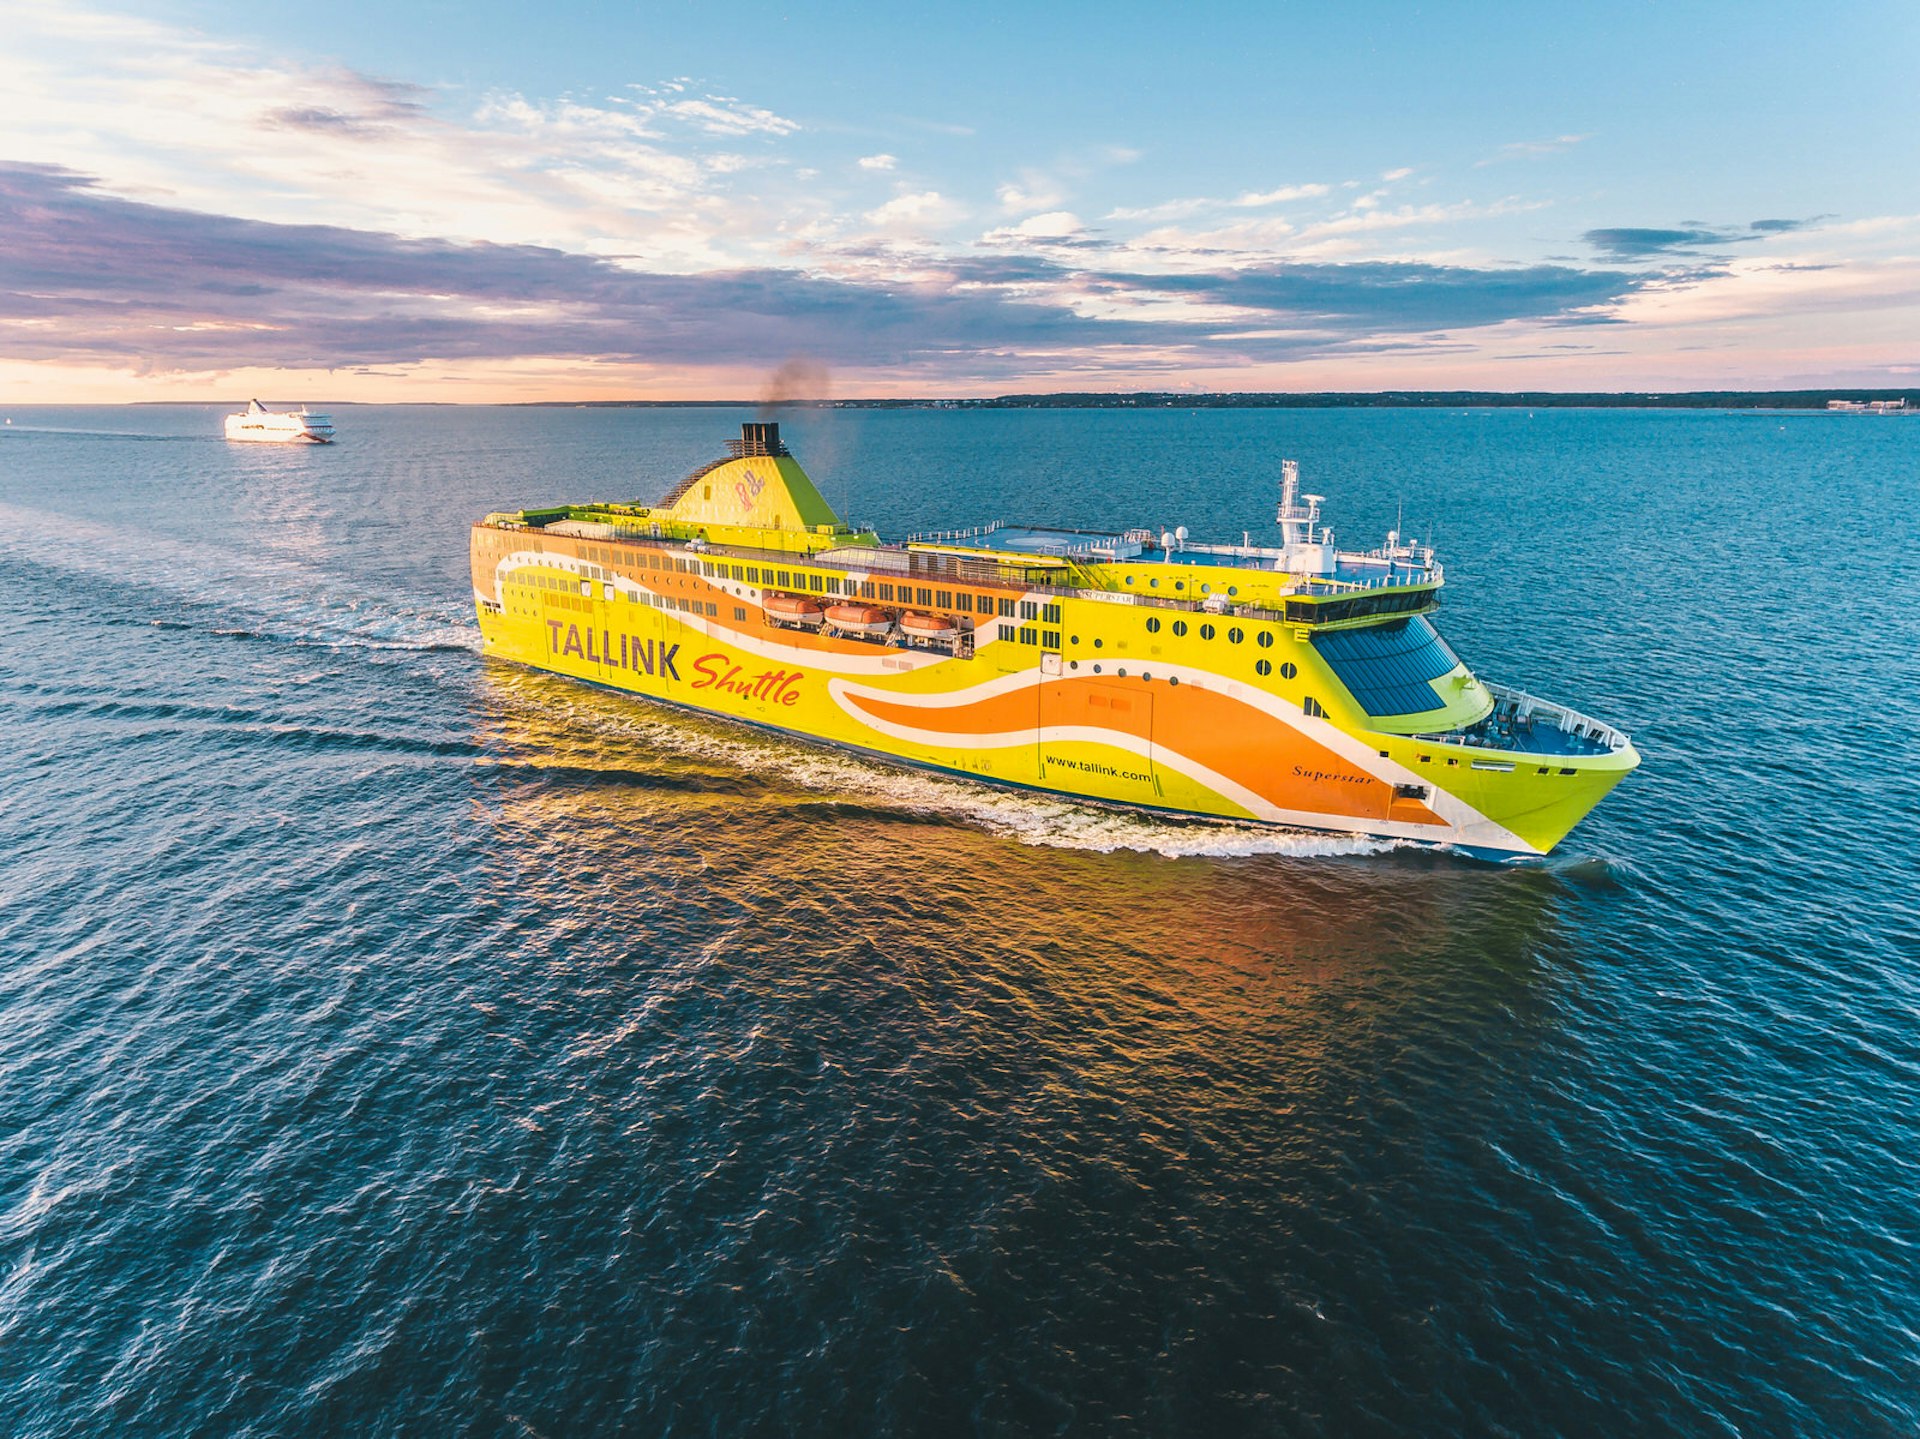 The Tallink Shuttle ferry, sailing on the Baltic Sea © Dmitry Tkachenko Photo / Shutterstock